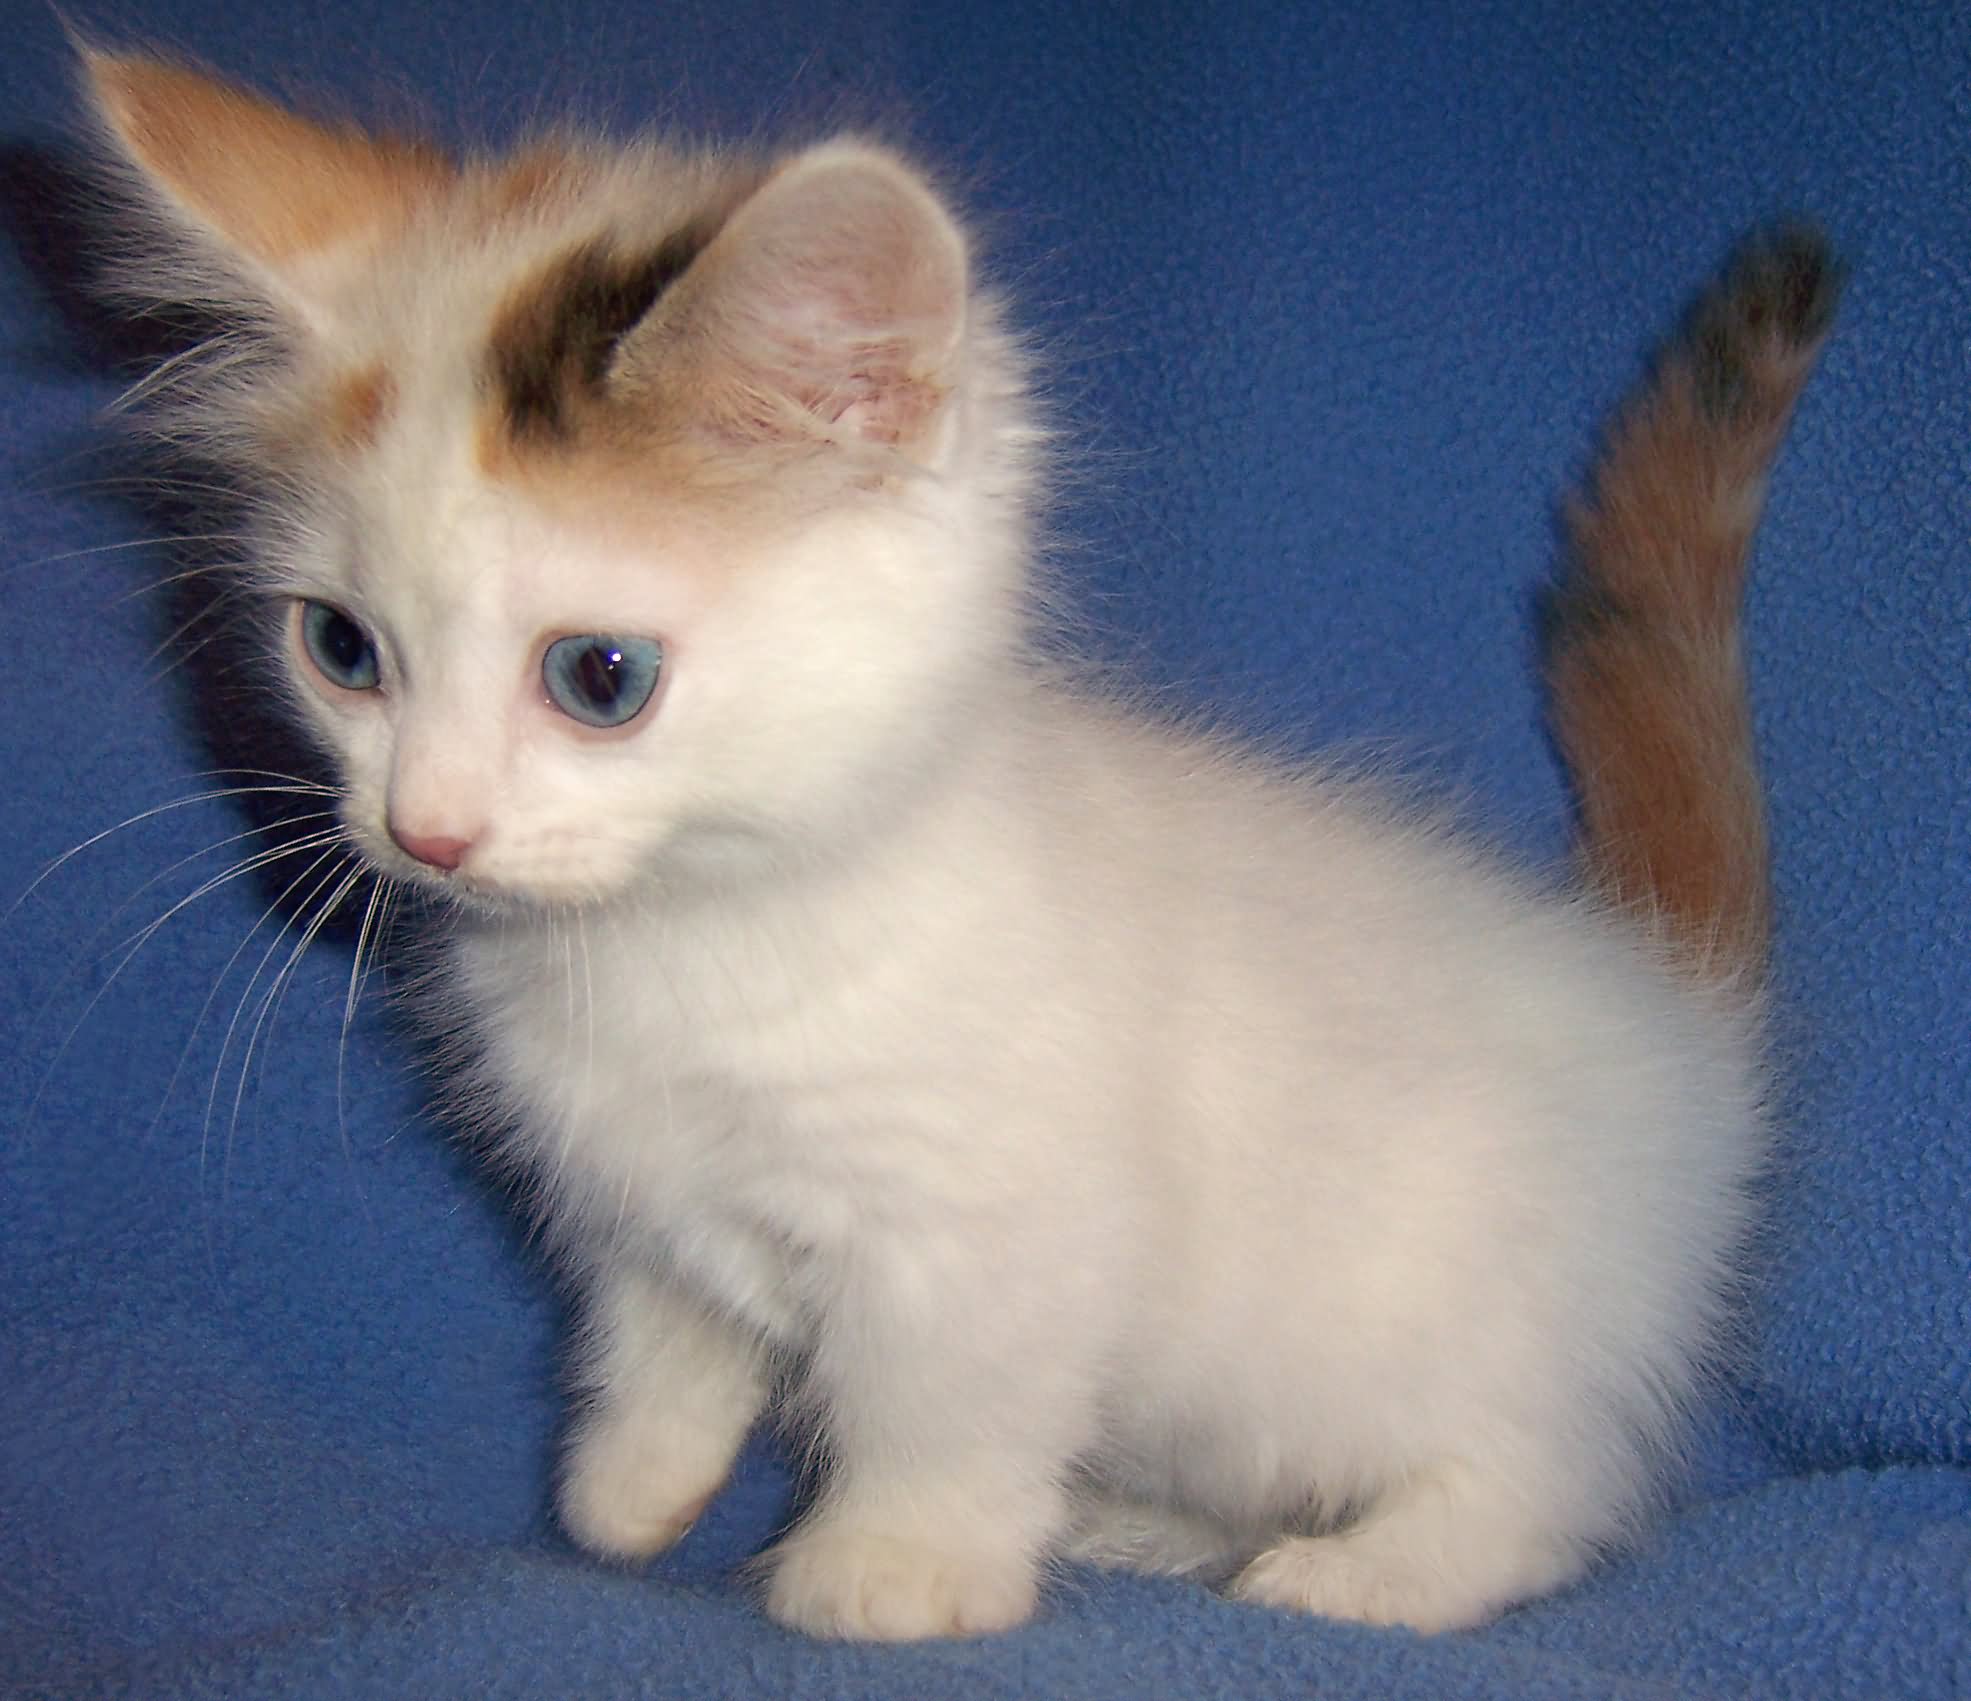 Munchkin kittens for sale in pa